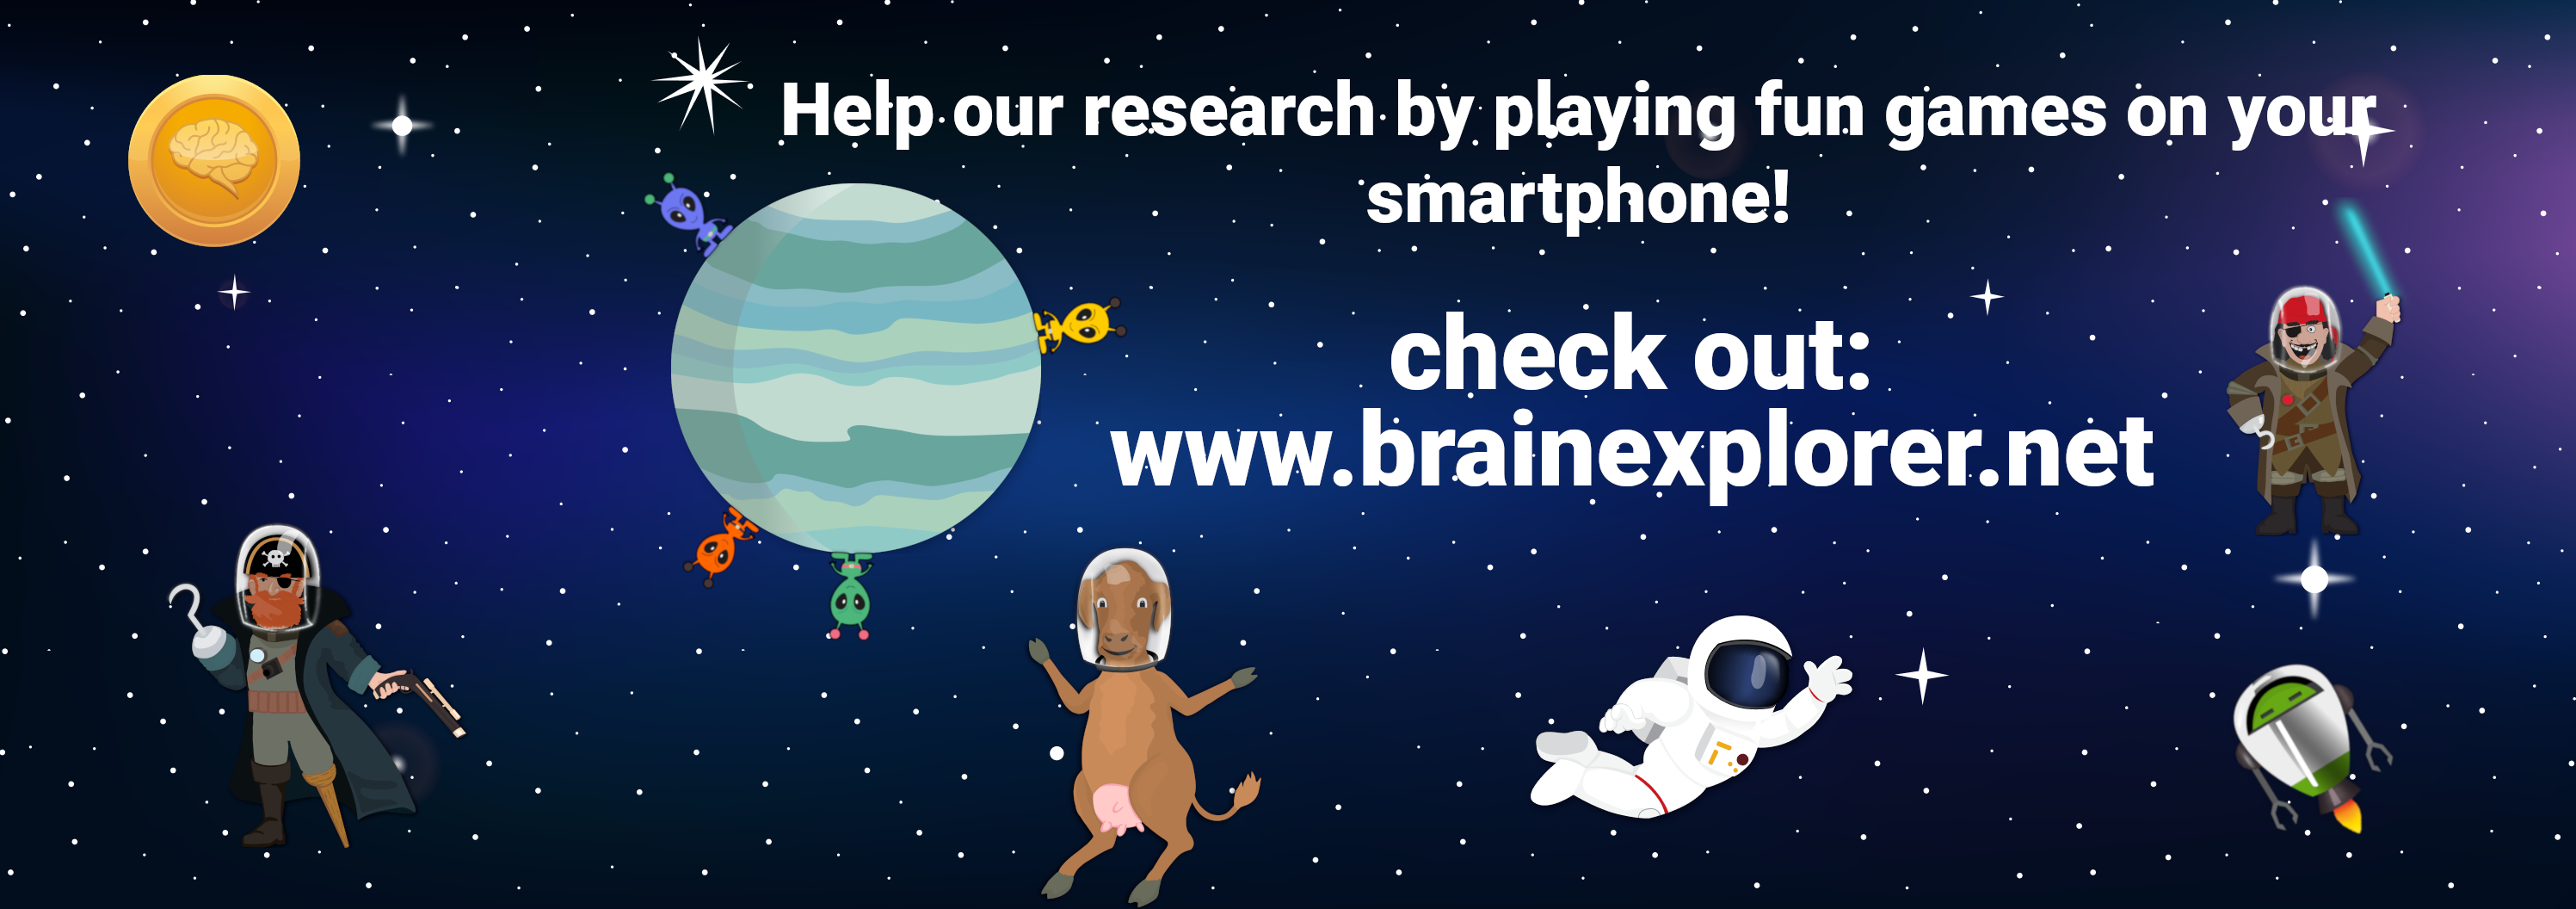 www.brainexplorer.net